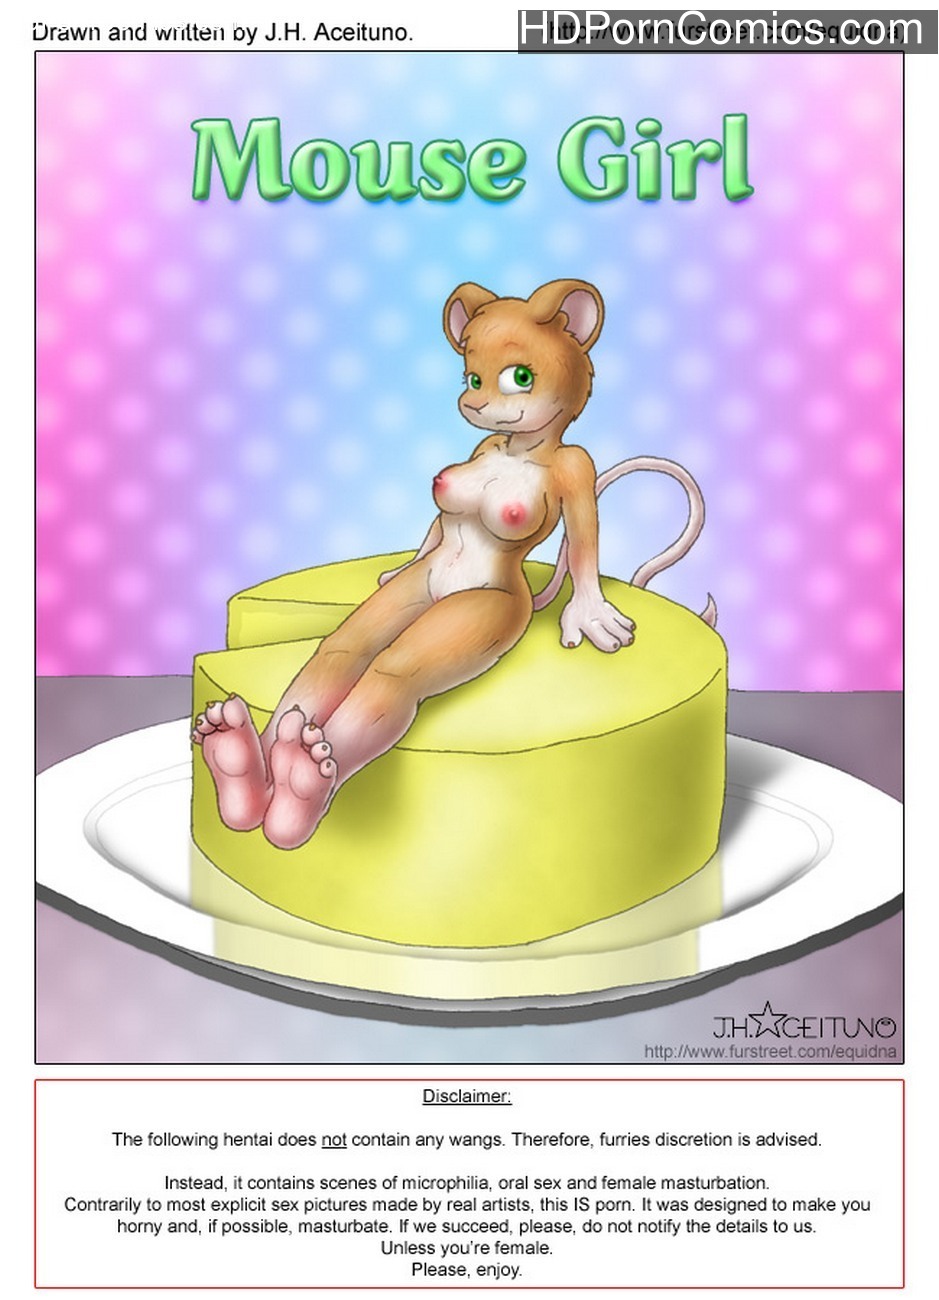 Female Mouse Furry - Mouse Girl Sex Comic - HD Porn Comics